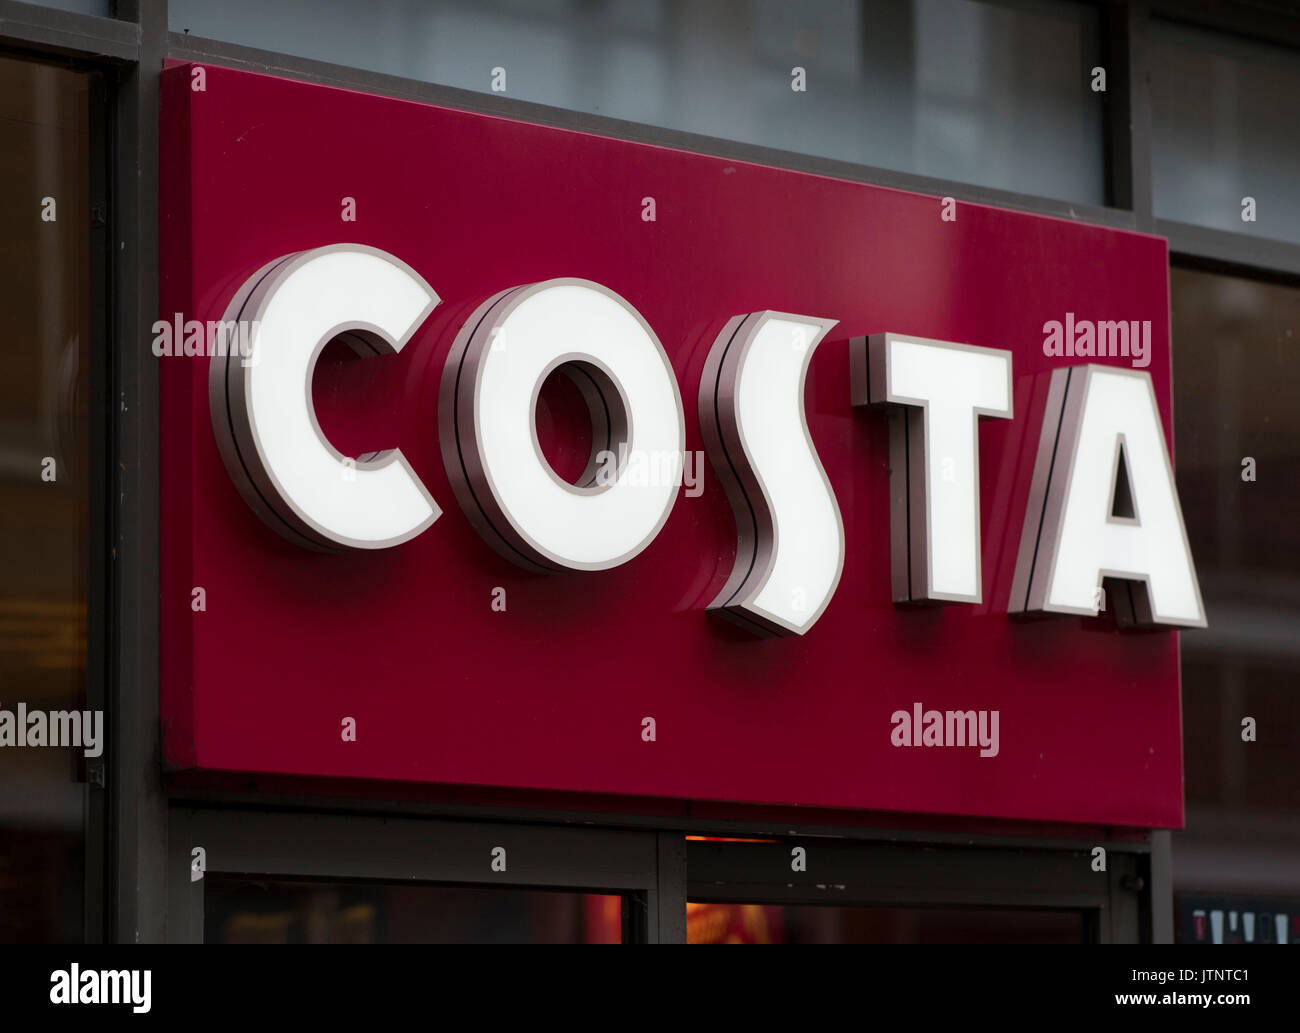 Costa coffee shop sign logo. Stock Photo